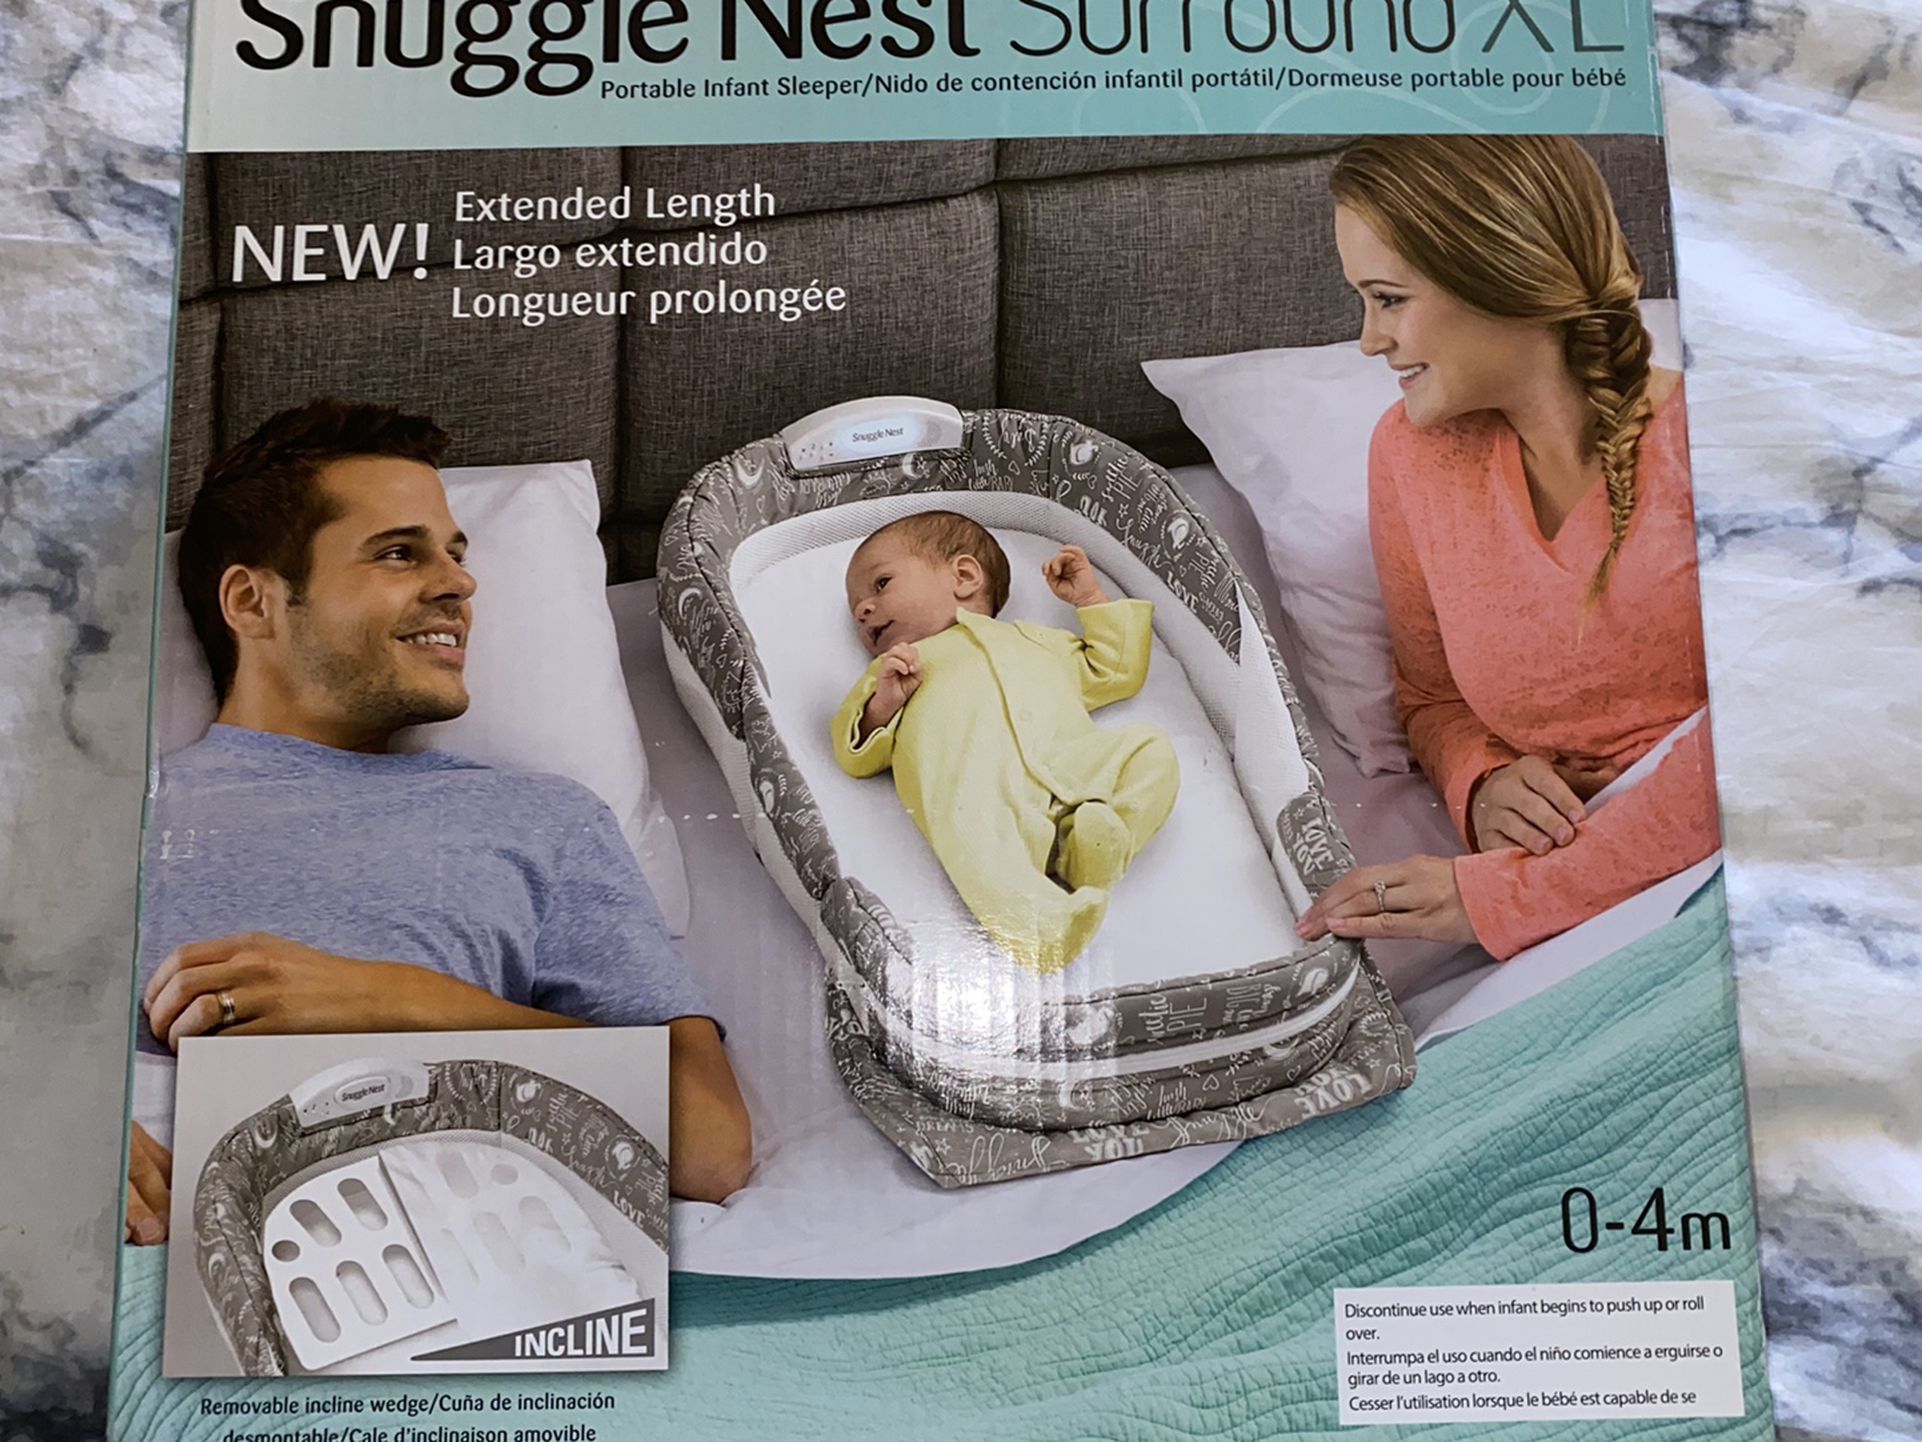 Baby Delight Snuggle Nest SurroundXL